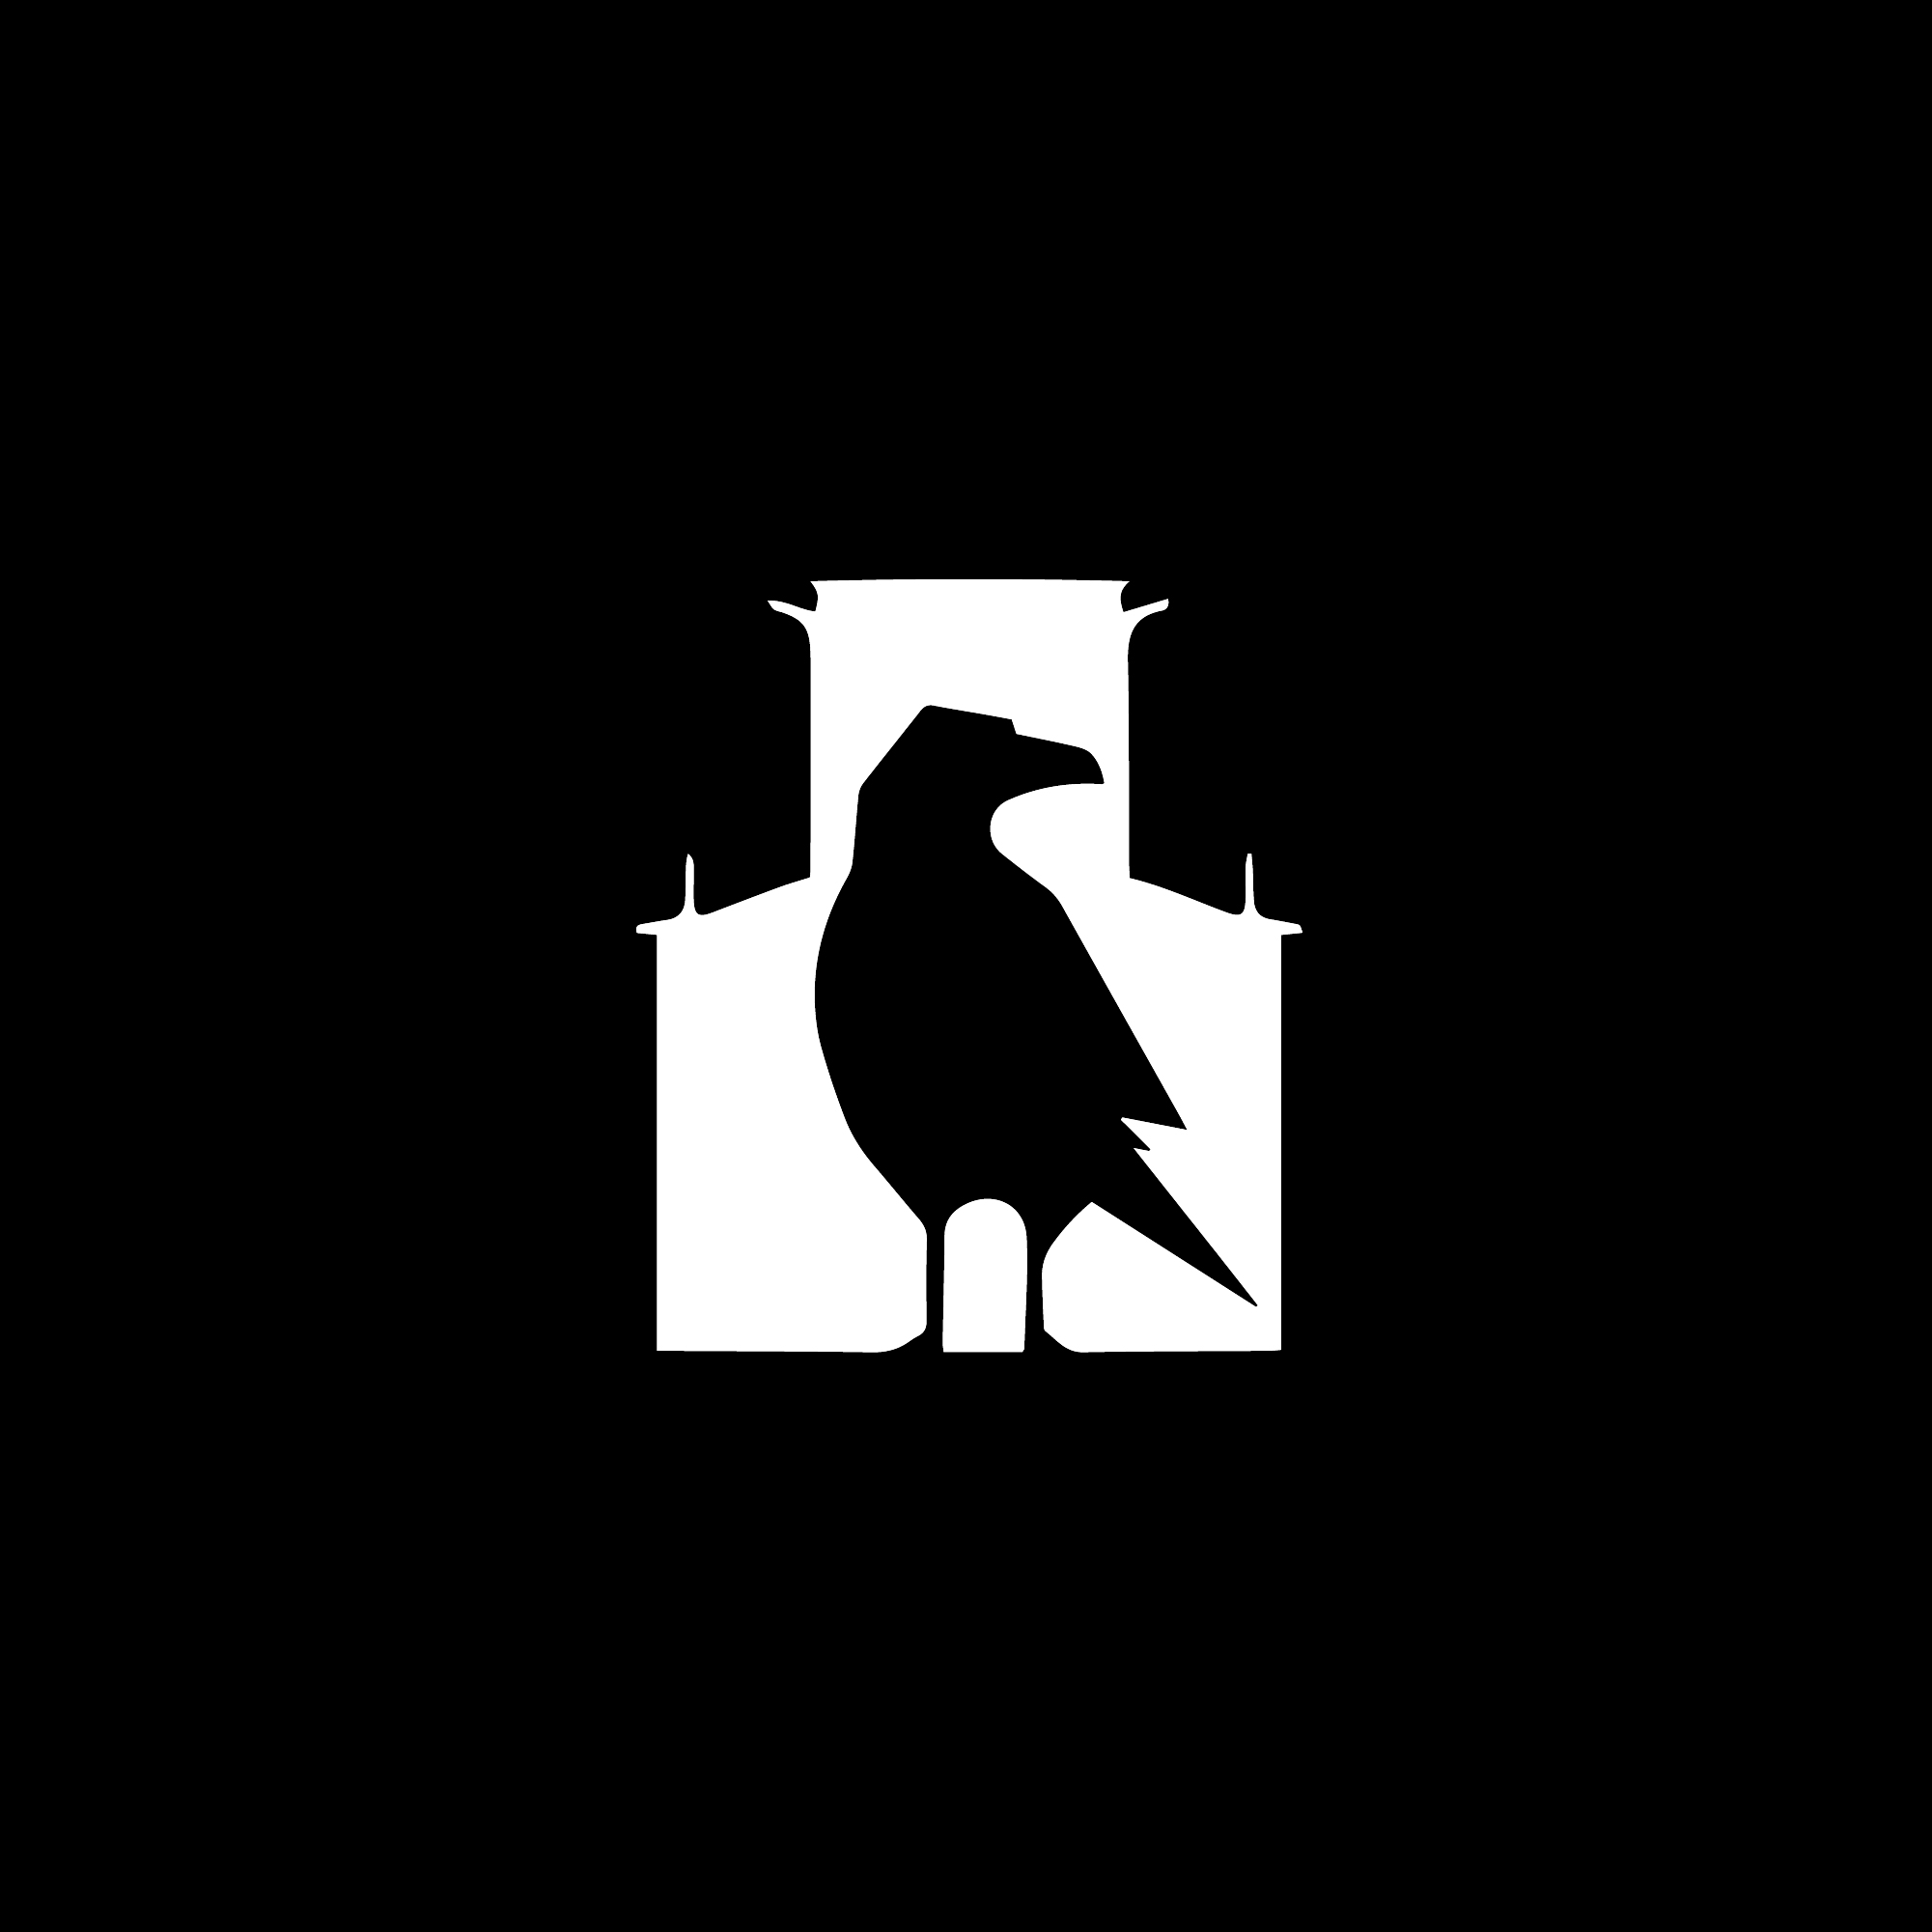 logo-design-black-white-minimalist-tower-raven-bird-simple-elegant